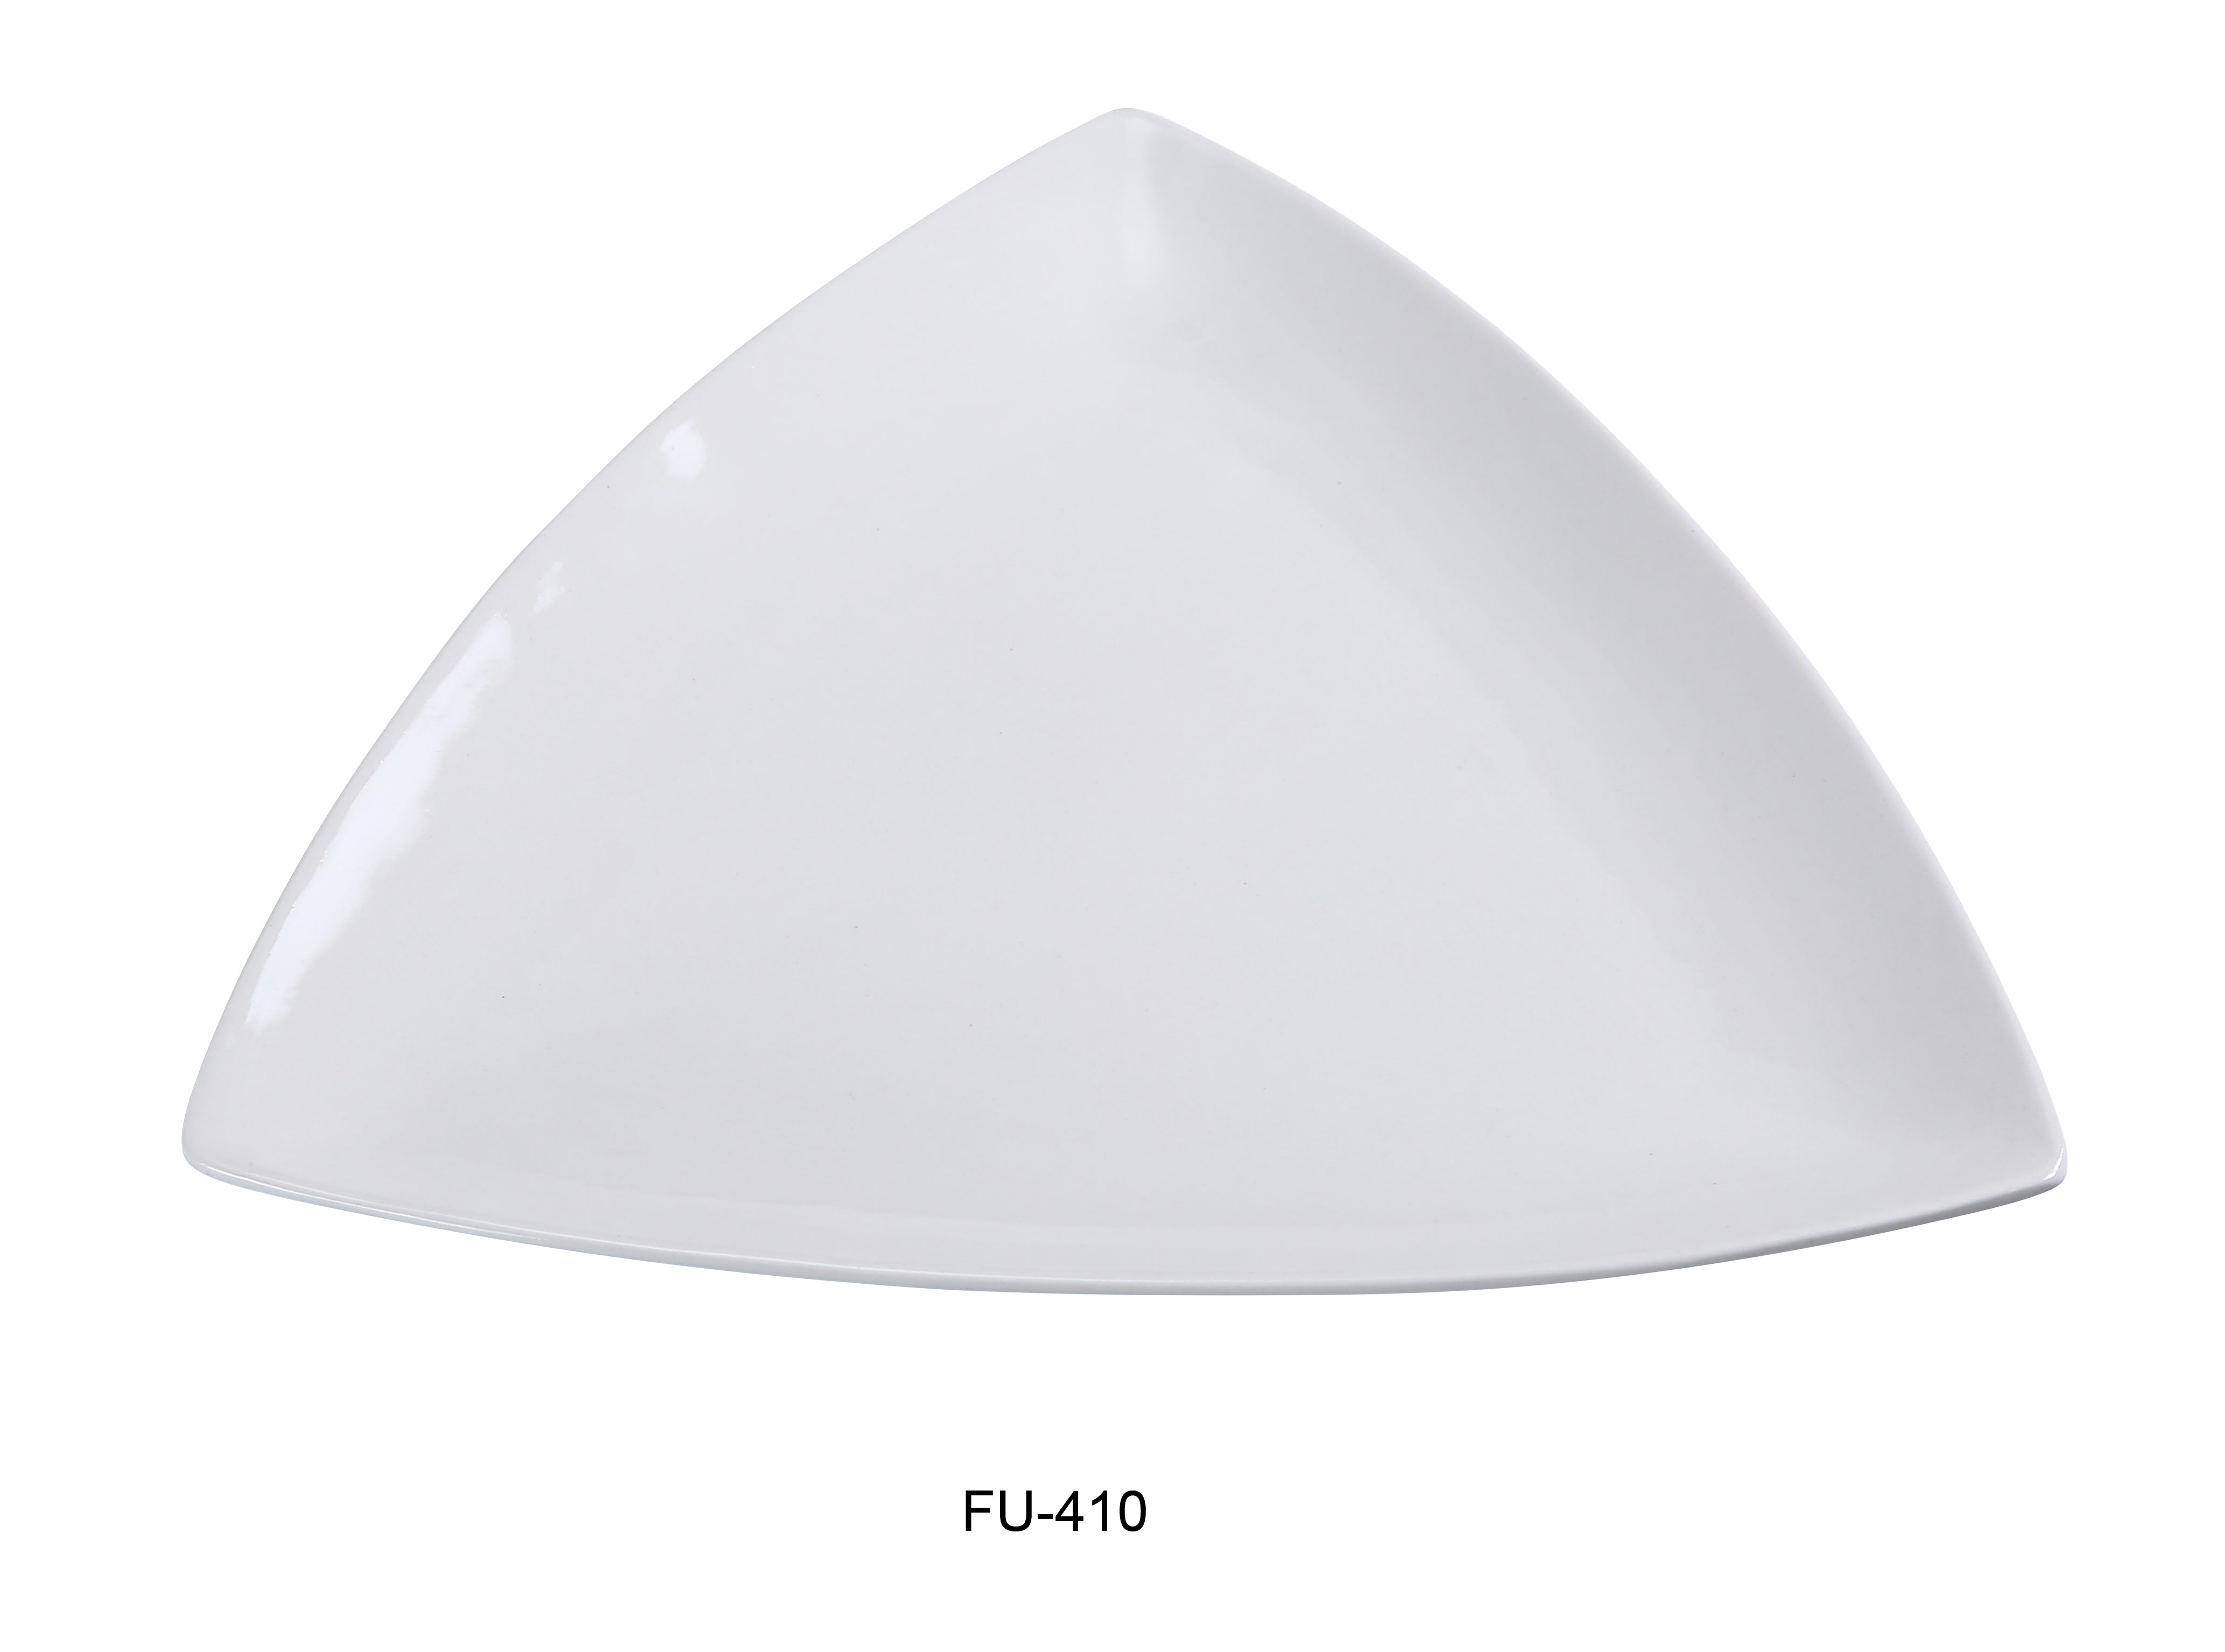 Yanco FU-410 Fuji 10" Triangle Plate | Lime Atlas